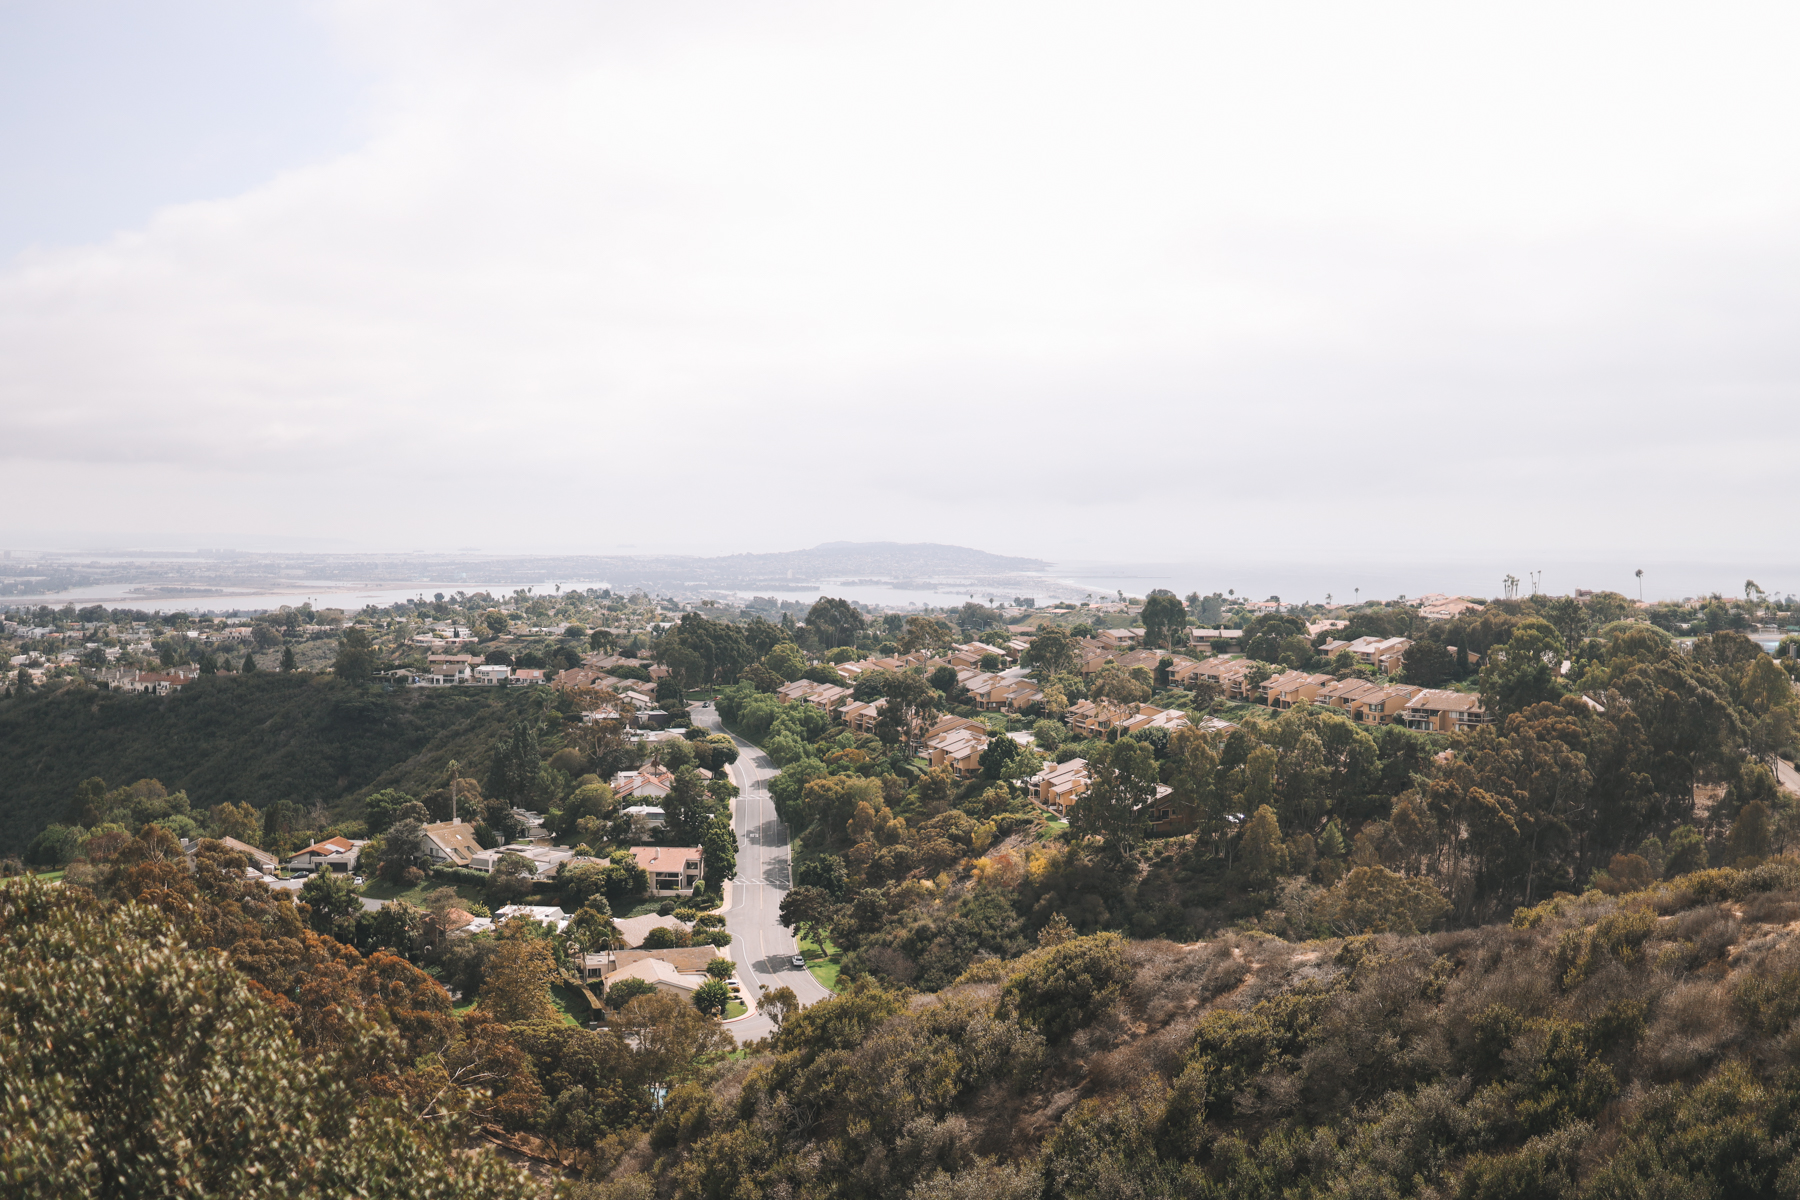 Mt. Soledad views | Snaps from California